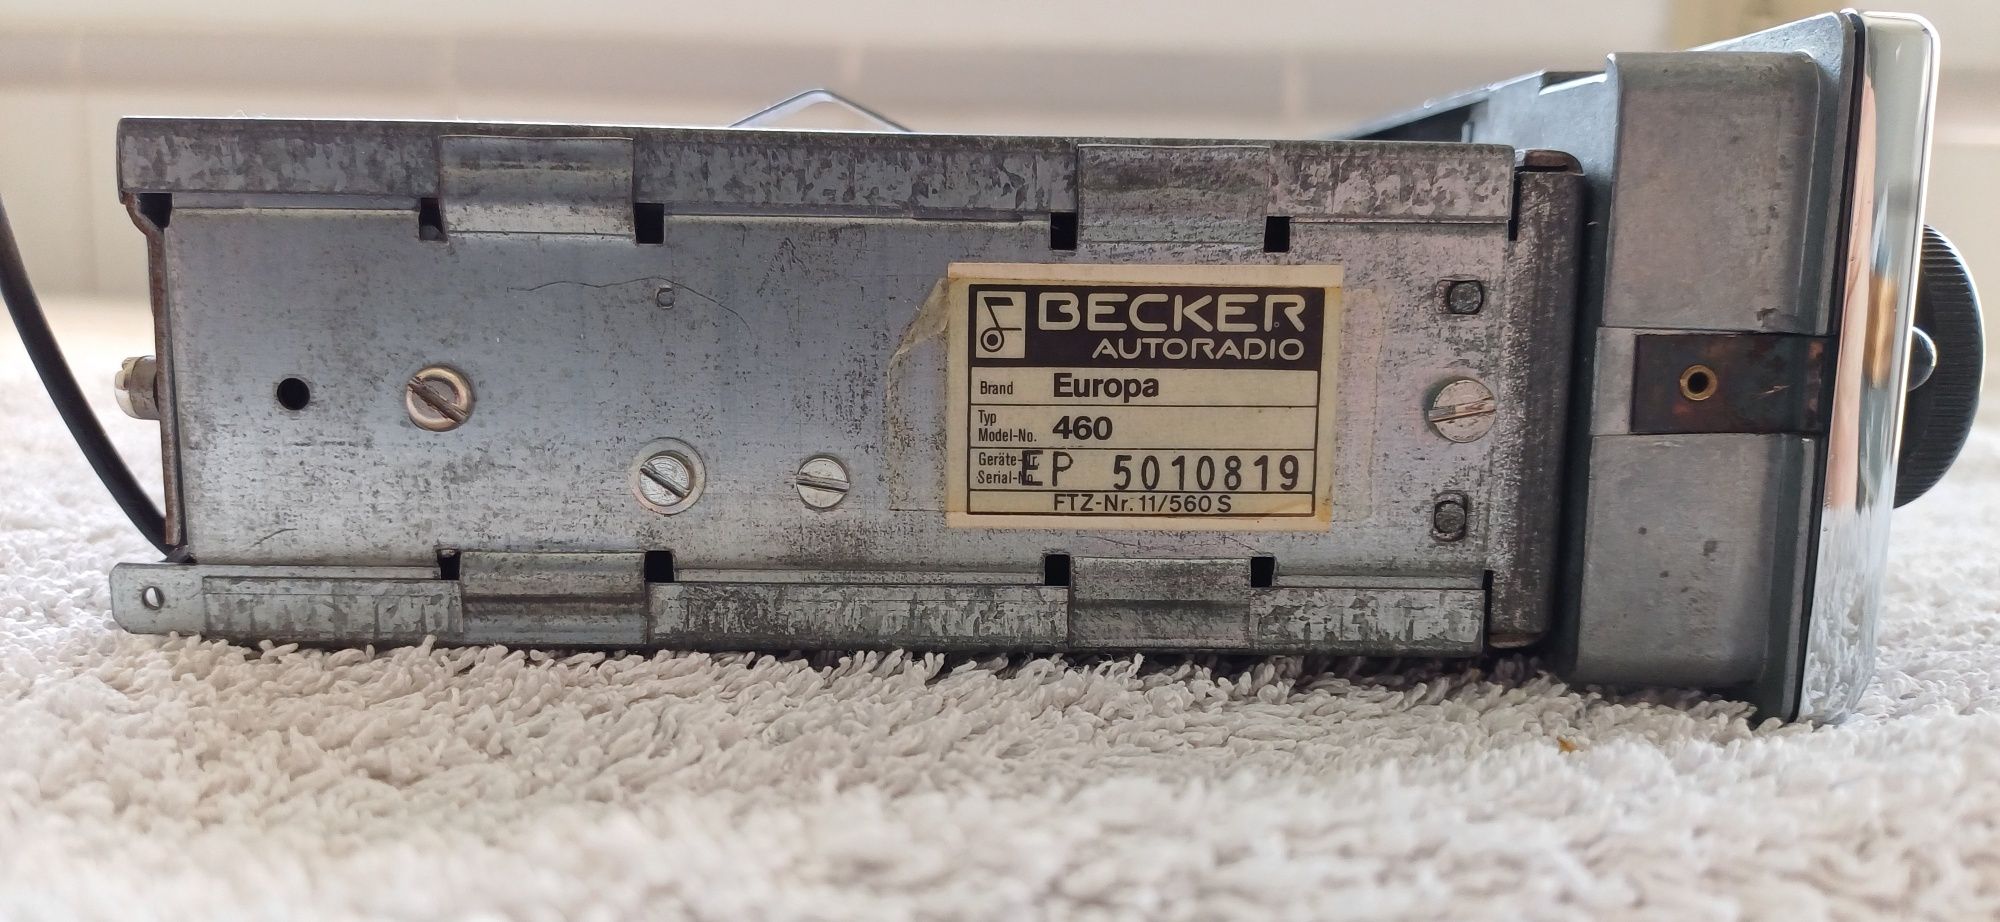 Radio becker europa vintage